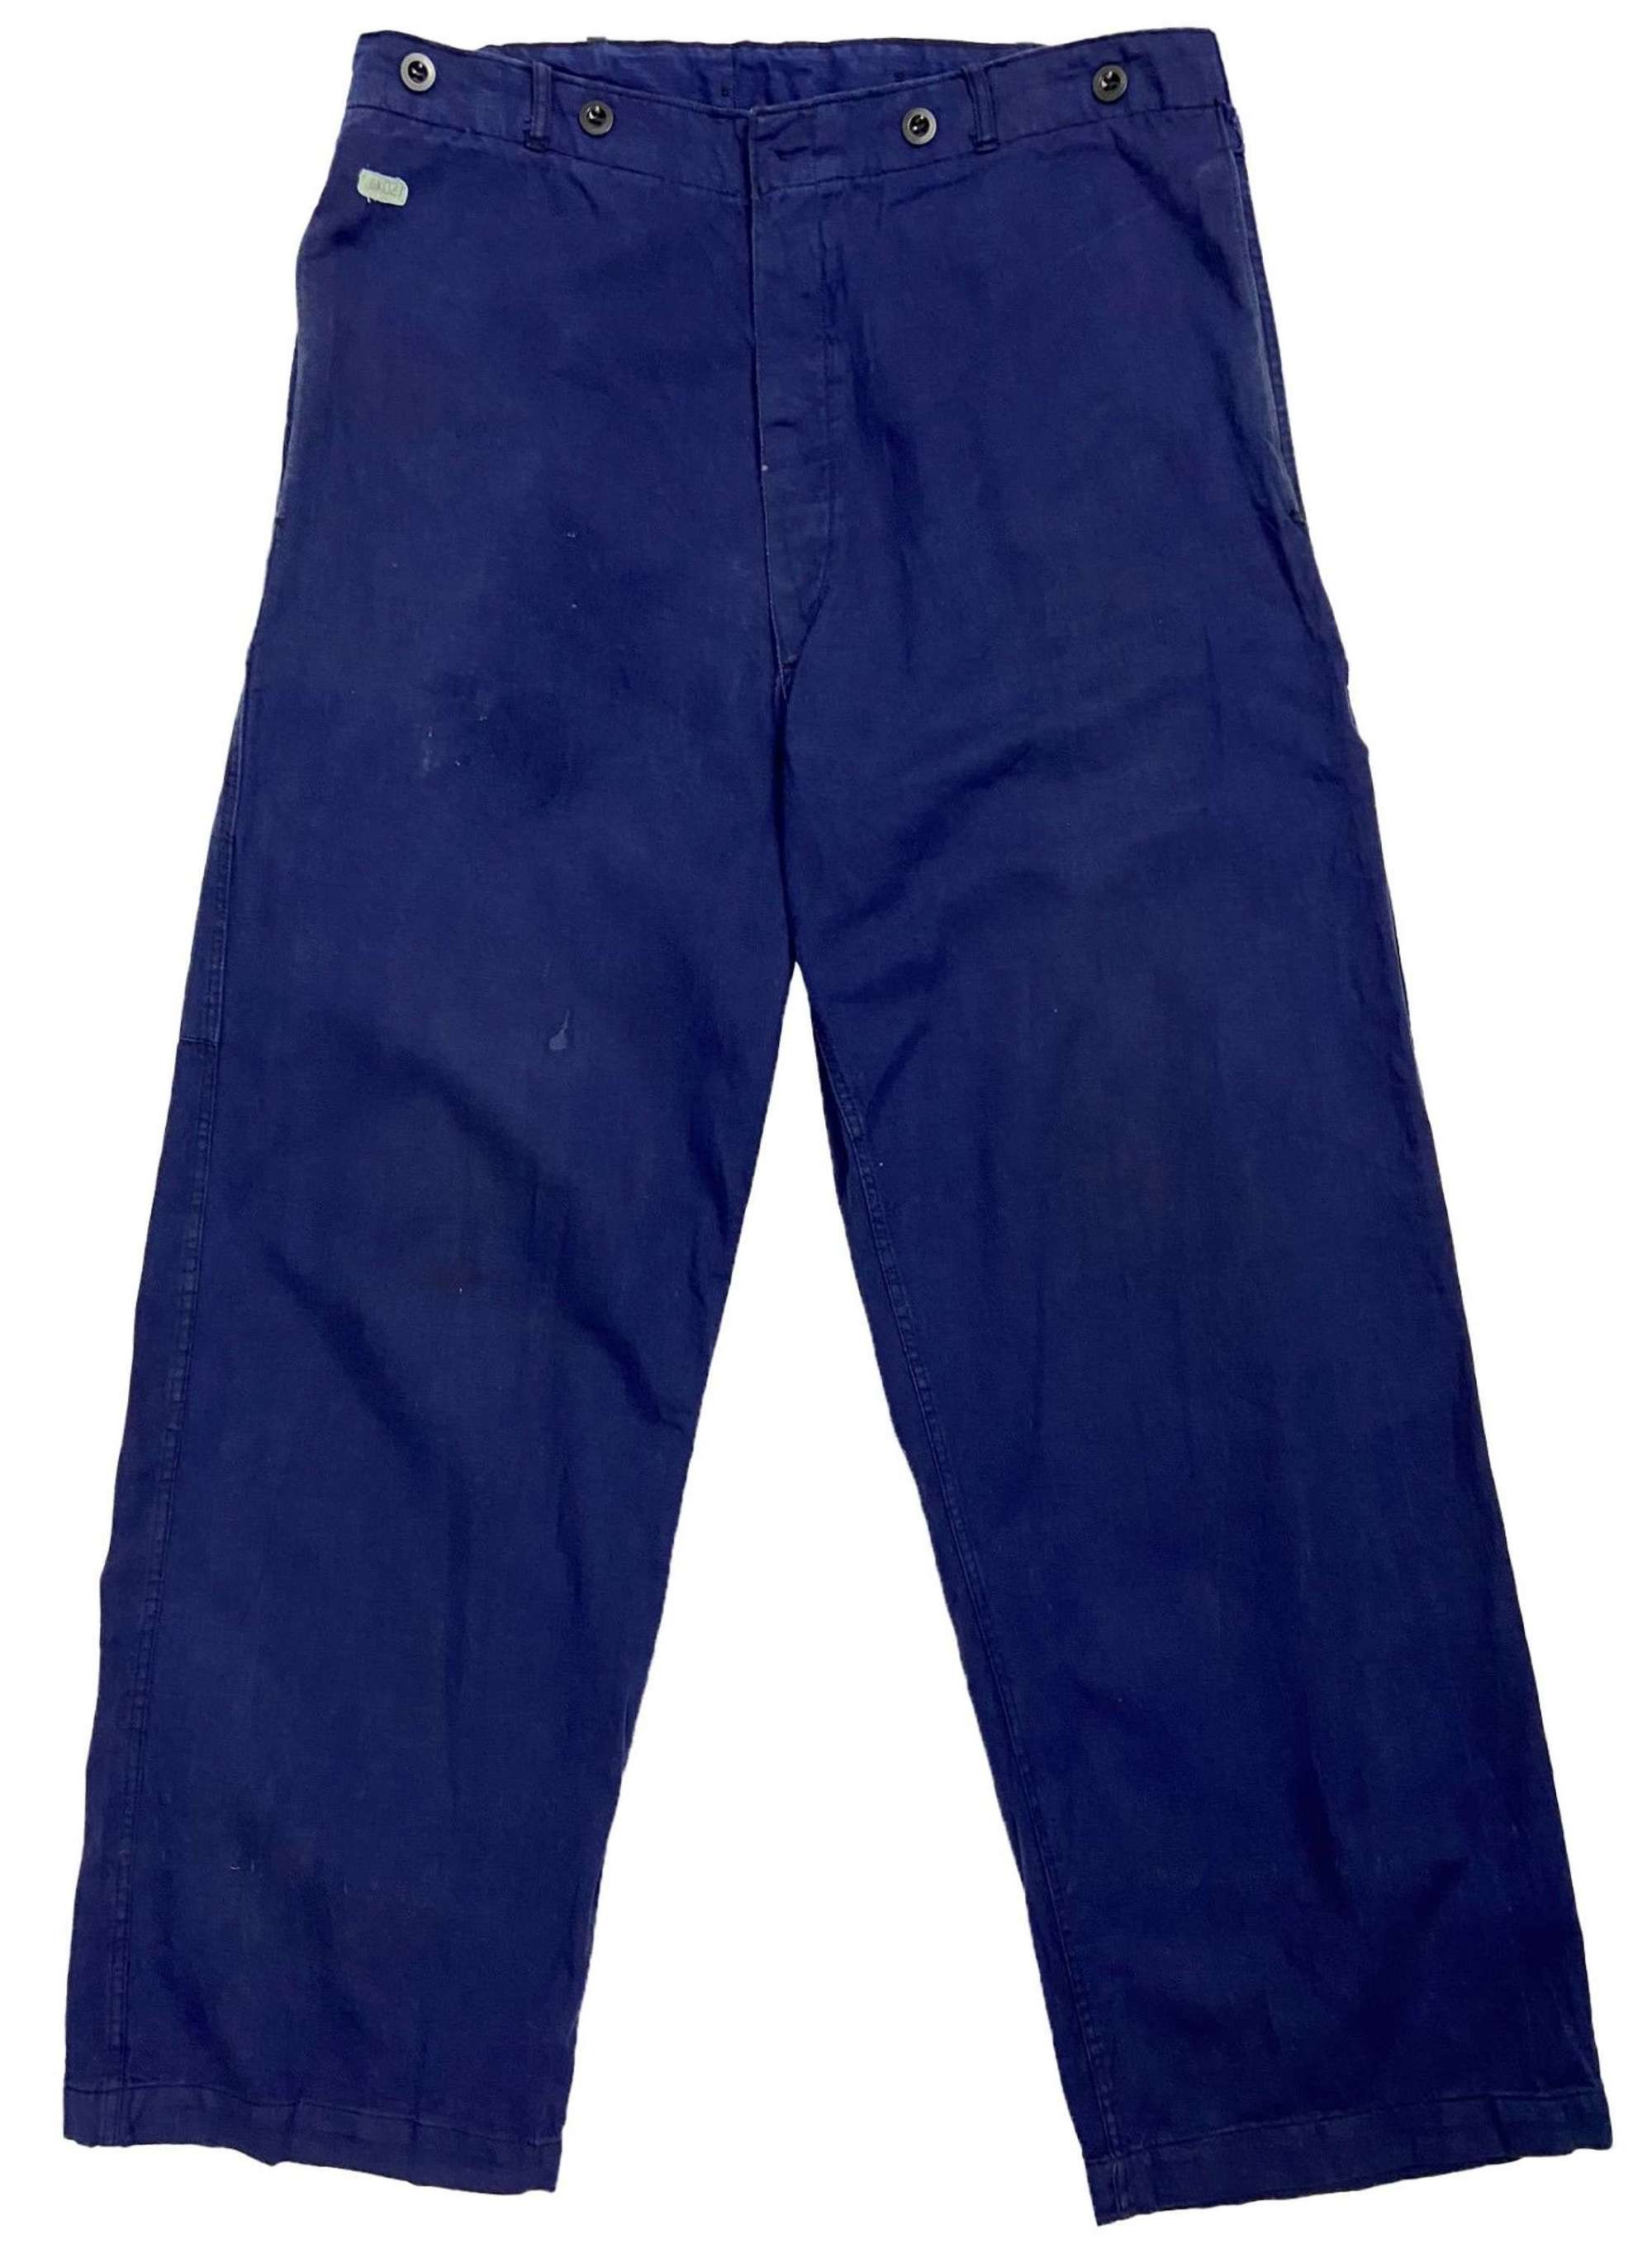 Original 1974 Dated German Military Work Trousers